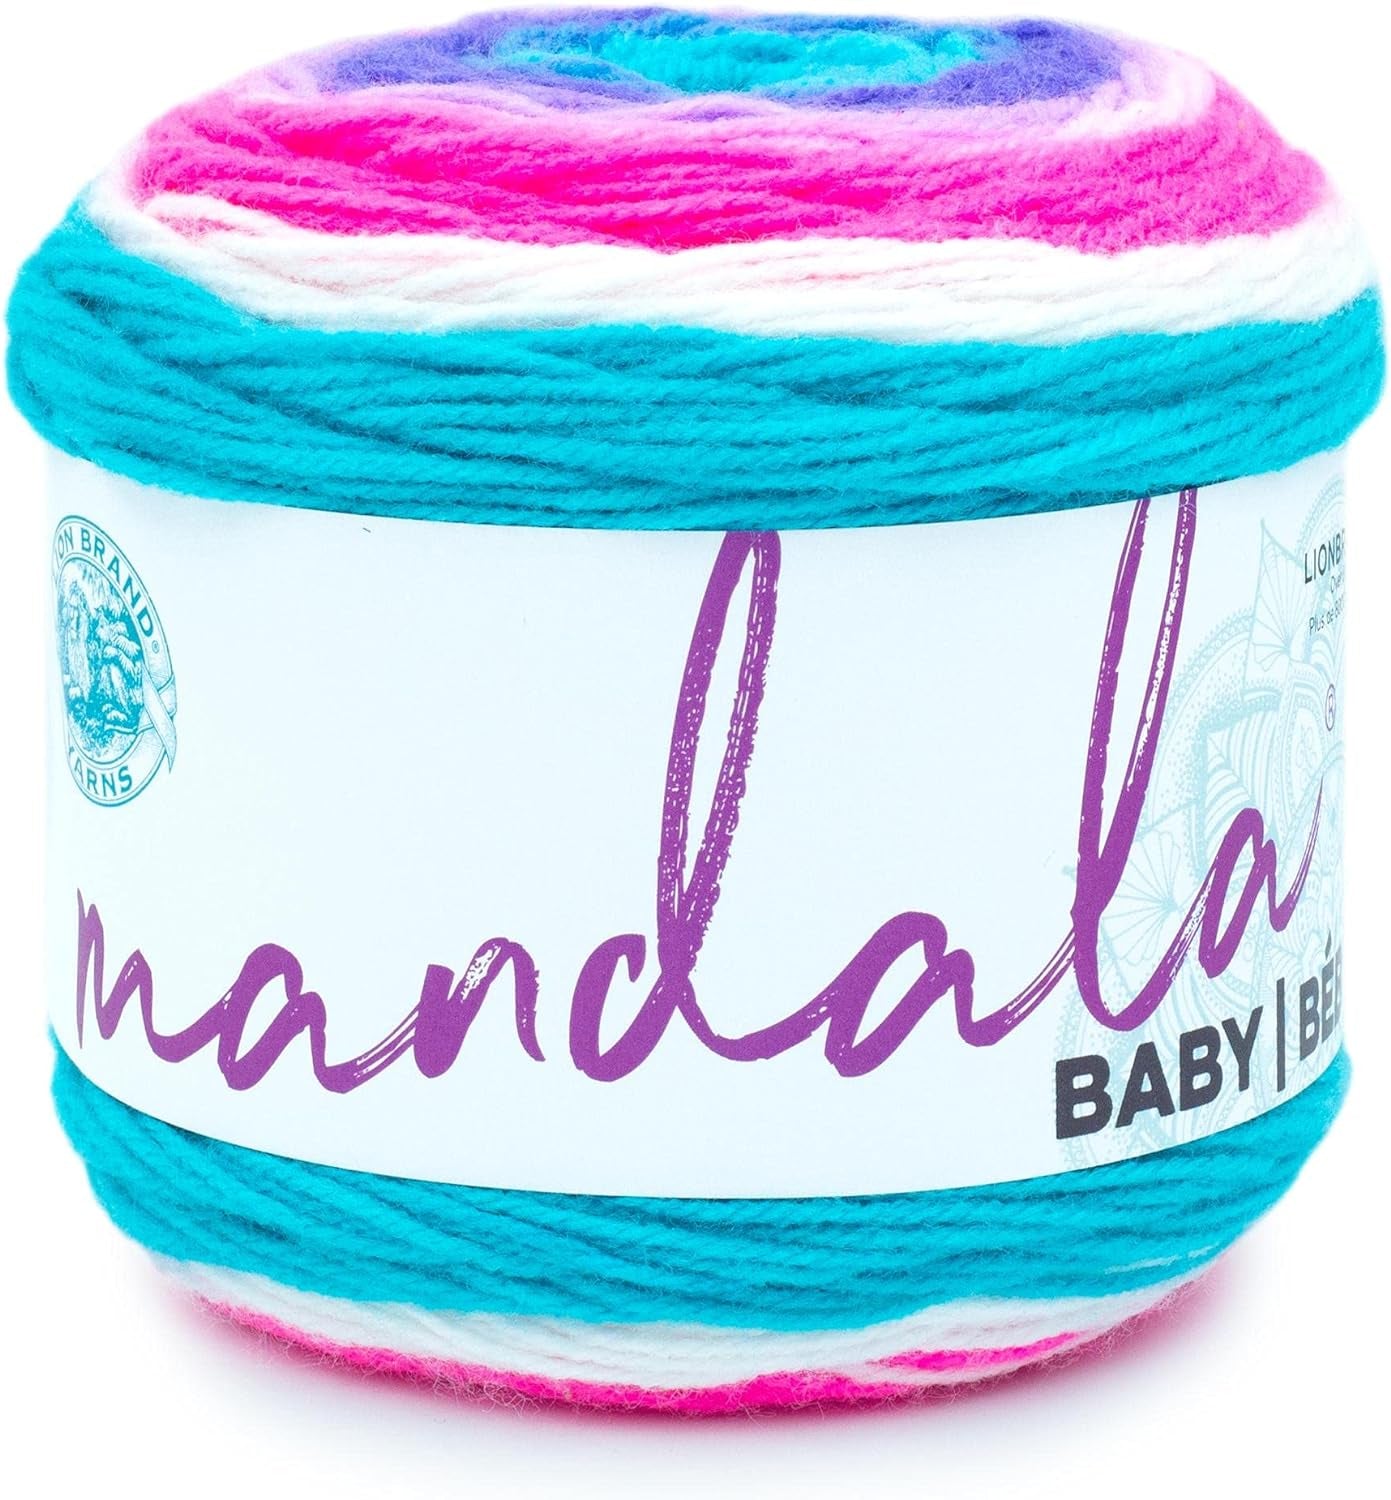 (1 Skein) Mandala Baby Yarn, Narnia, 1770 Foot (Pack of 1)